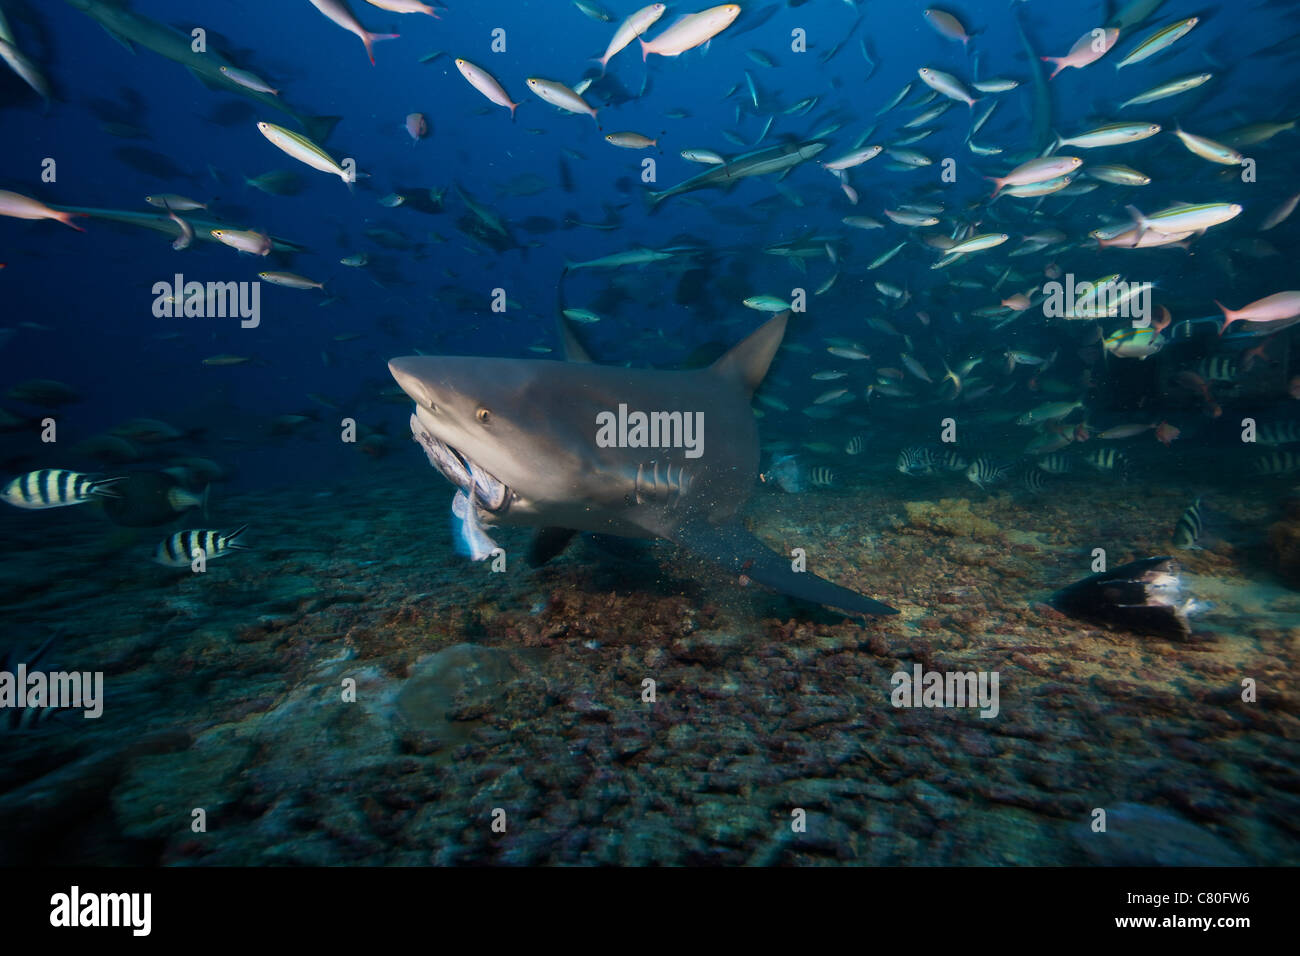 Shark Eating Fish